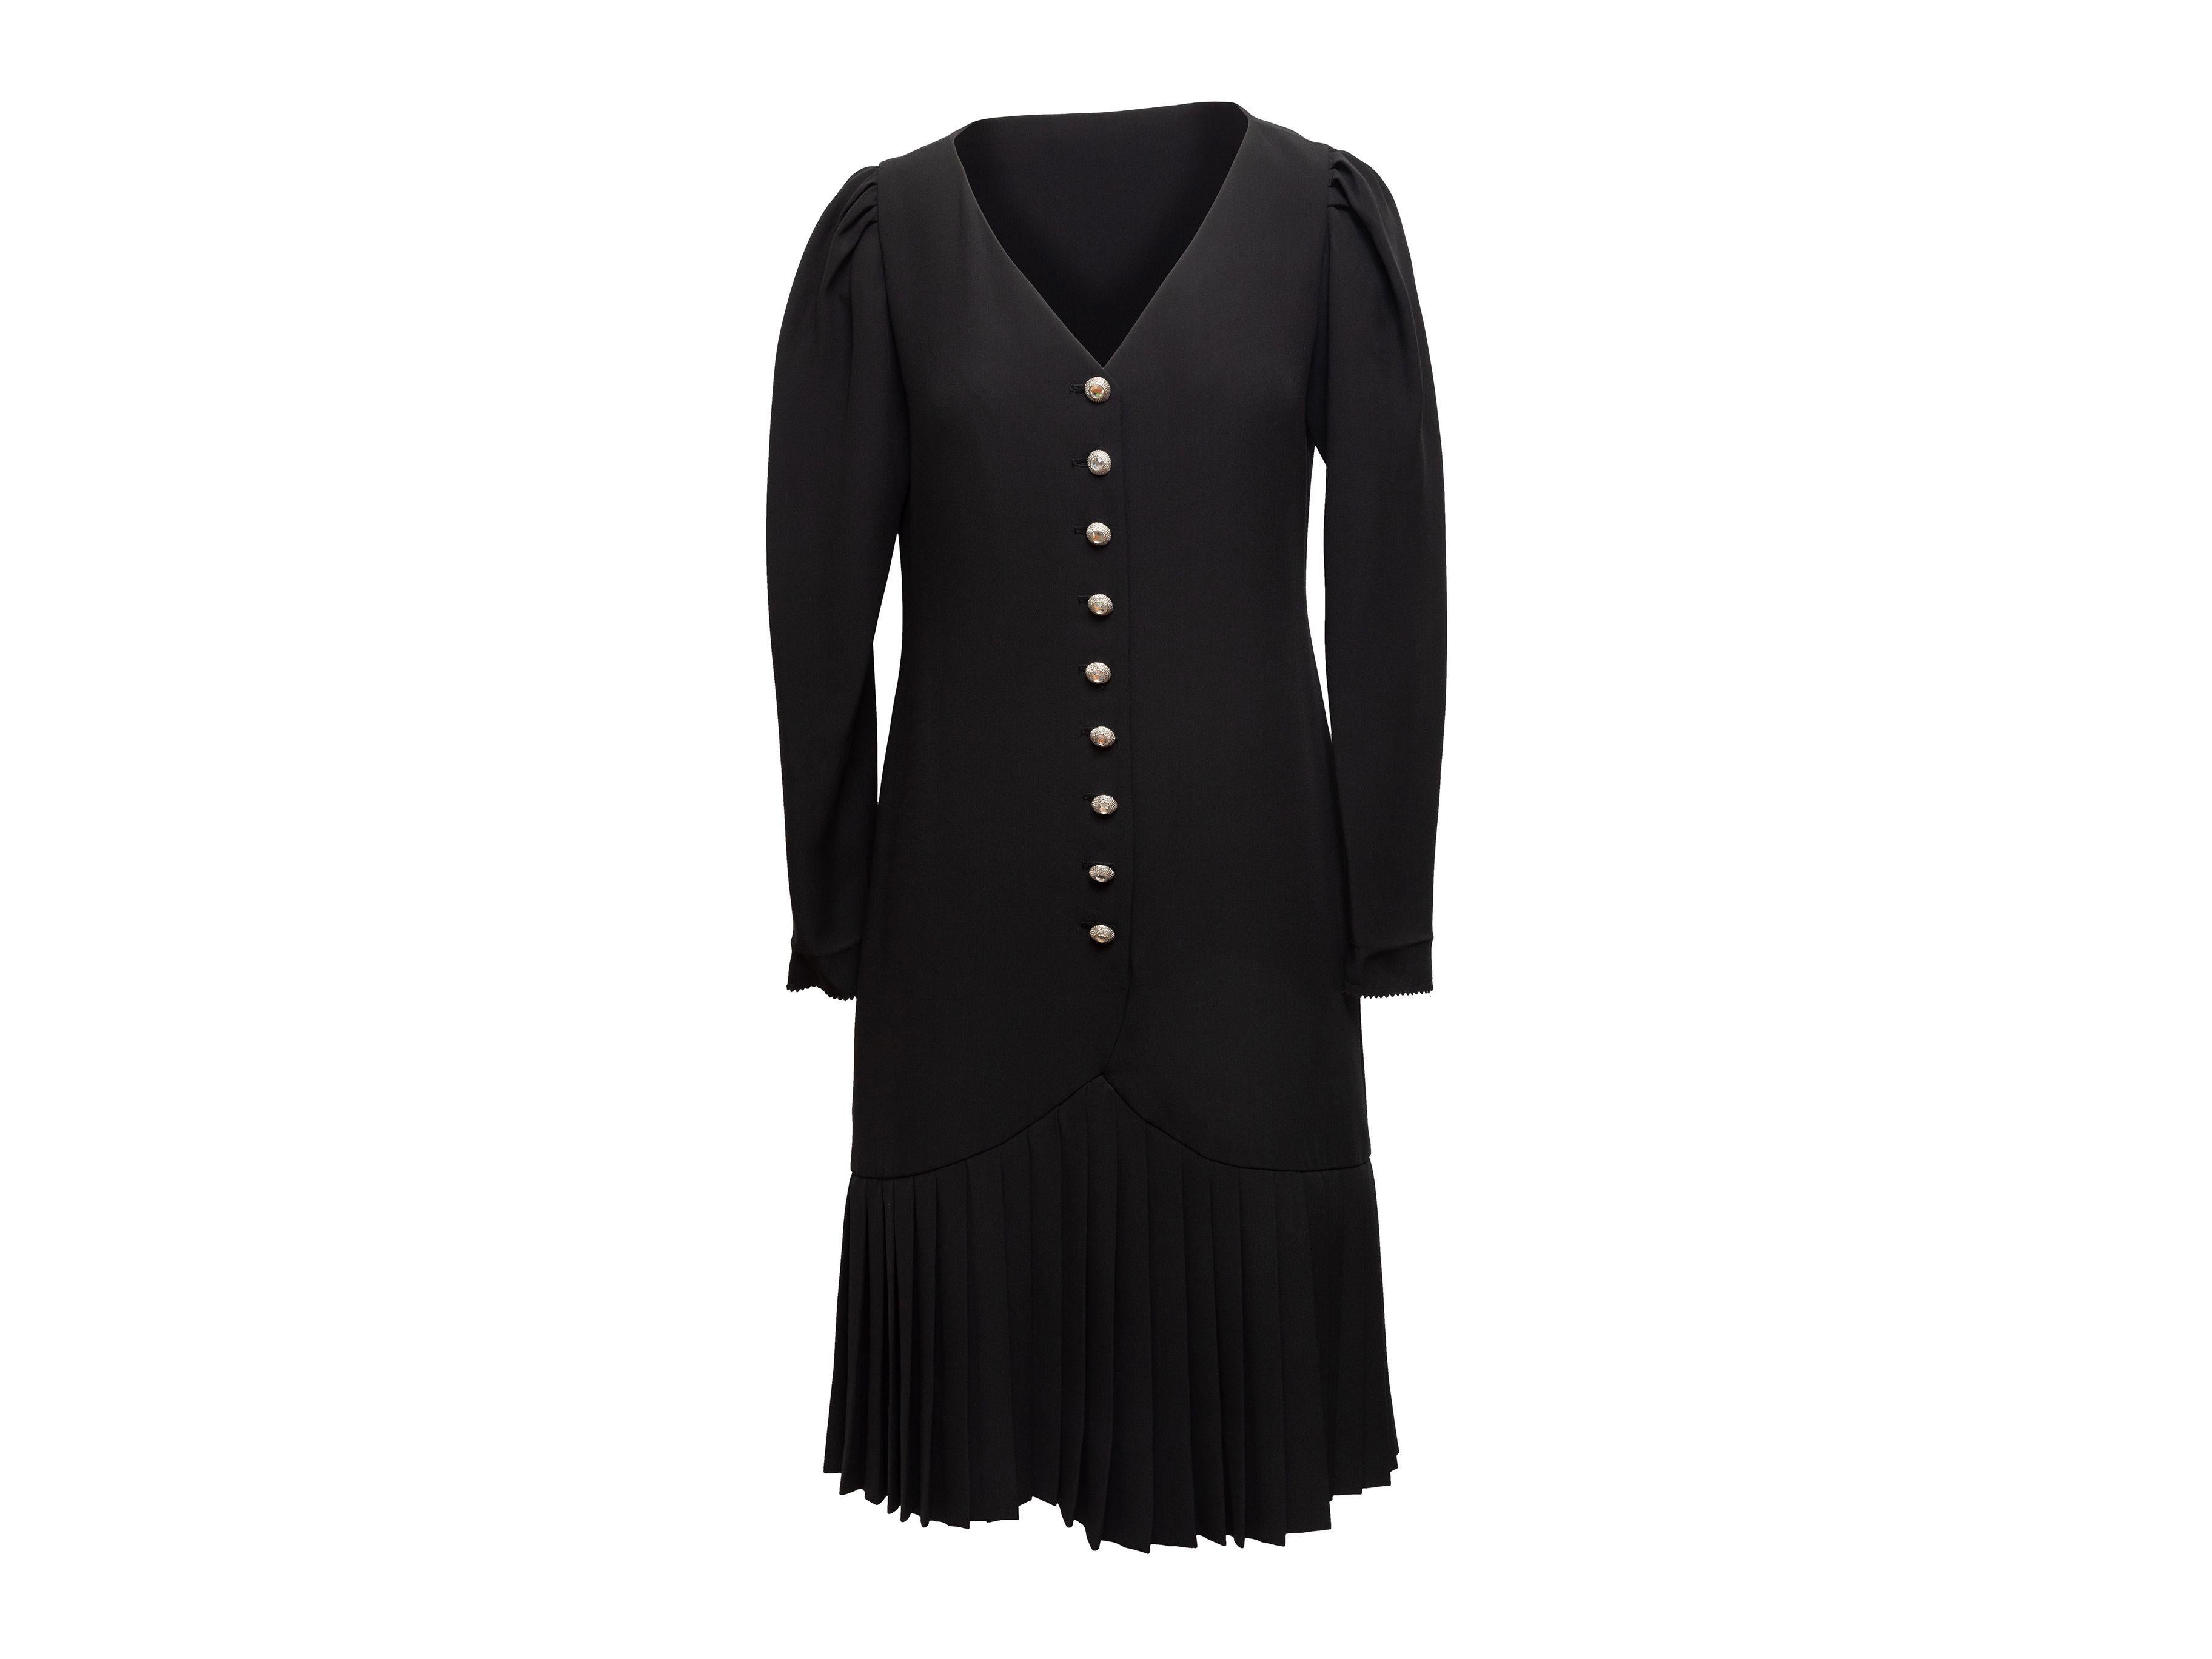 Adele Simpson Black Long Sleeve Button-Up Dress 1